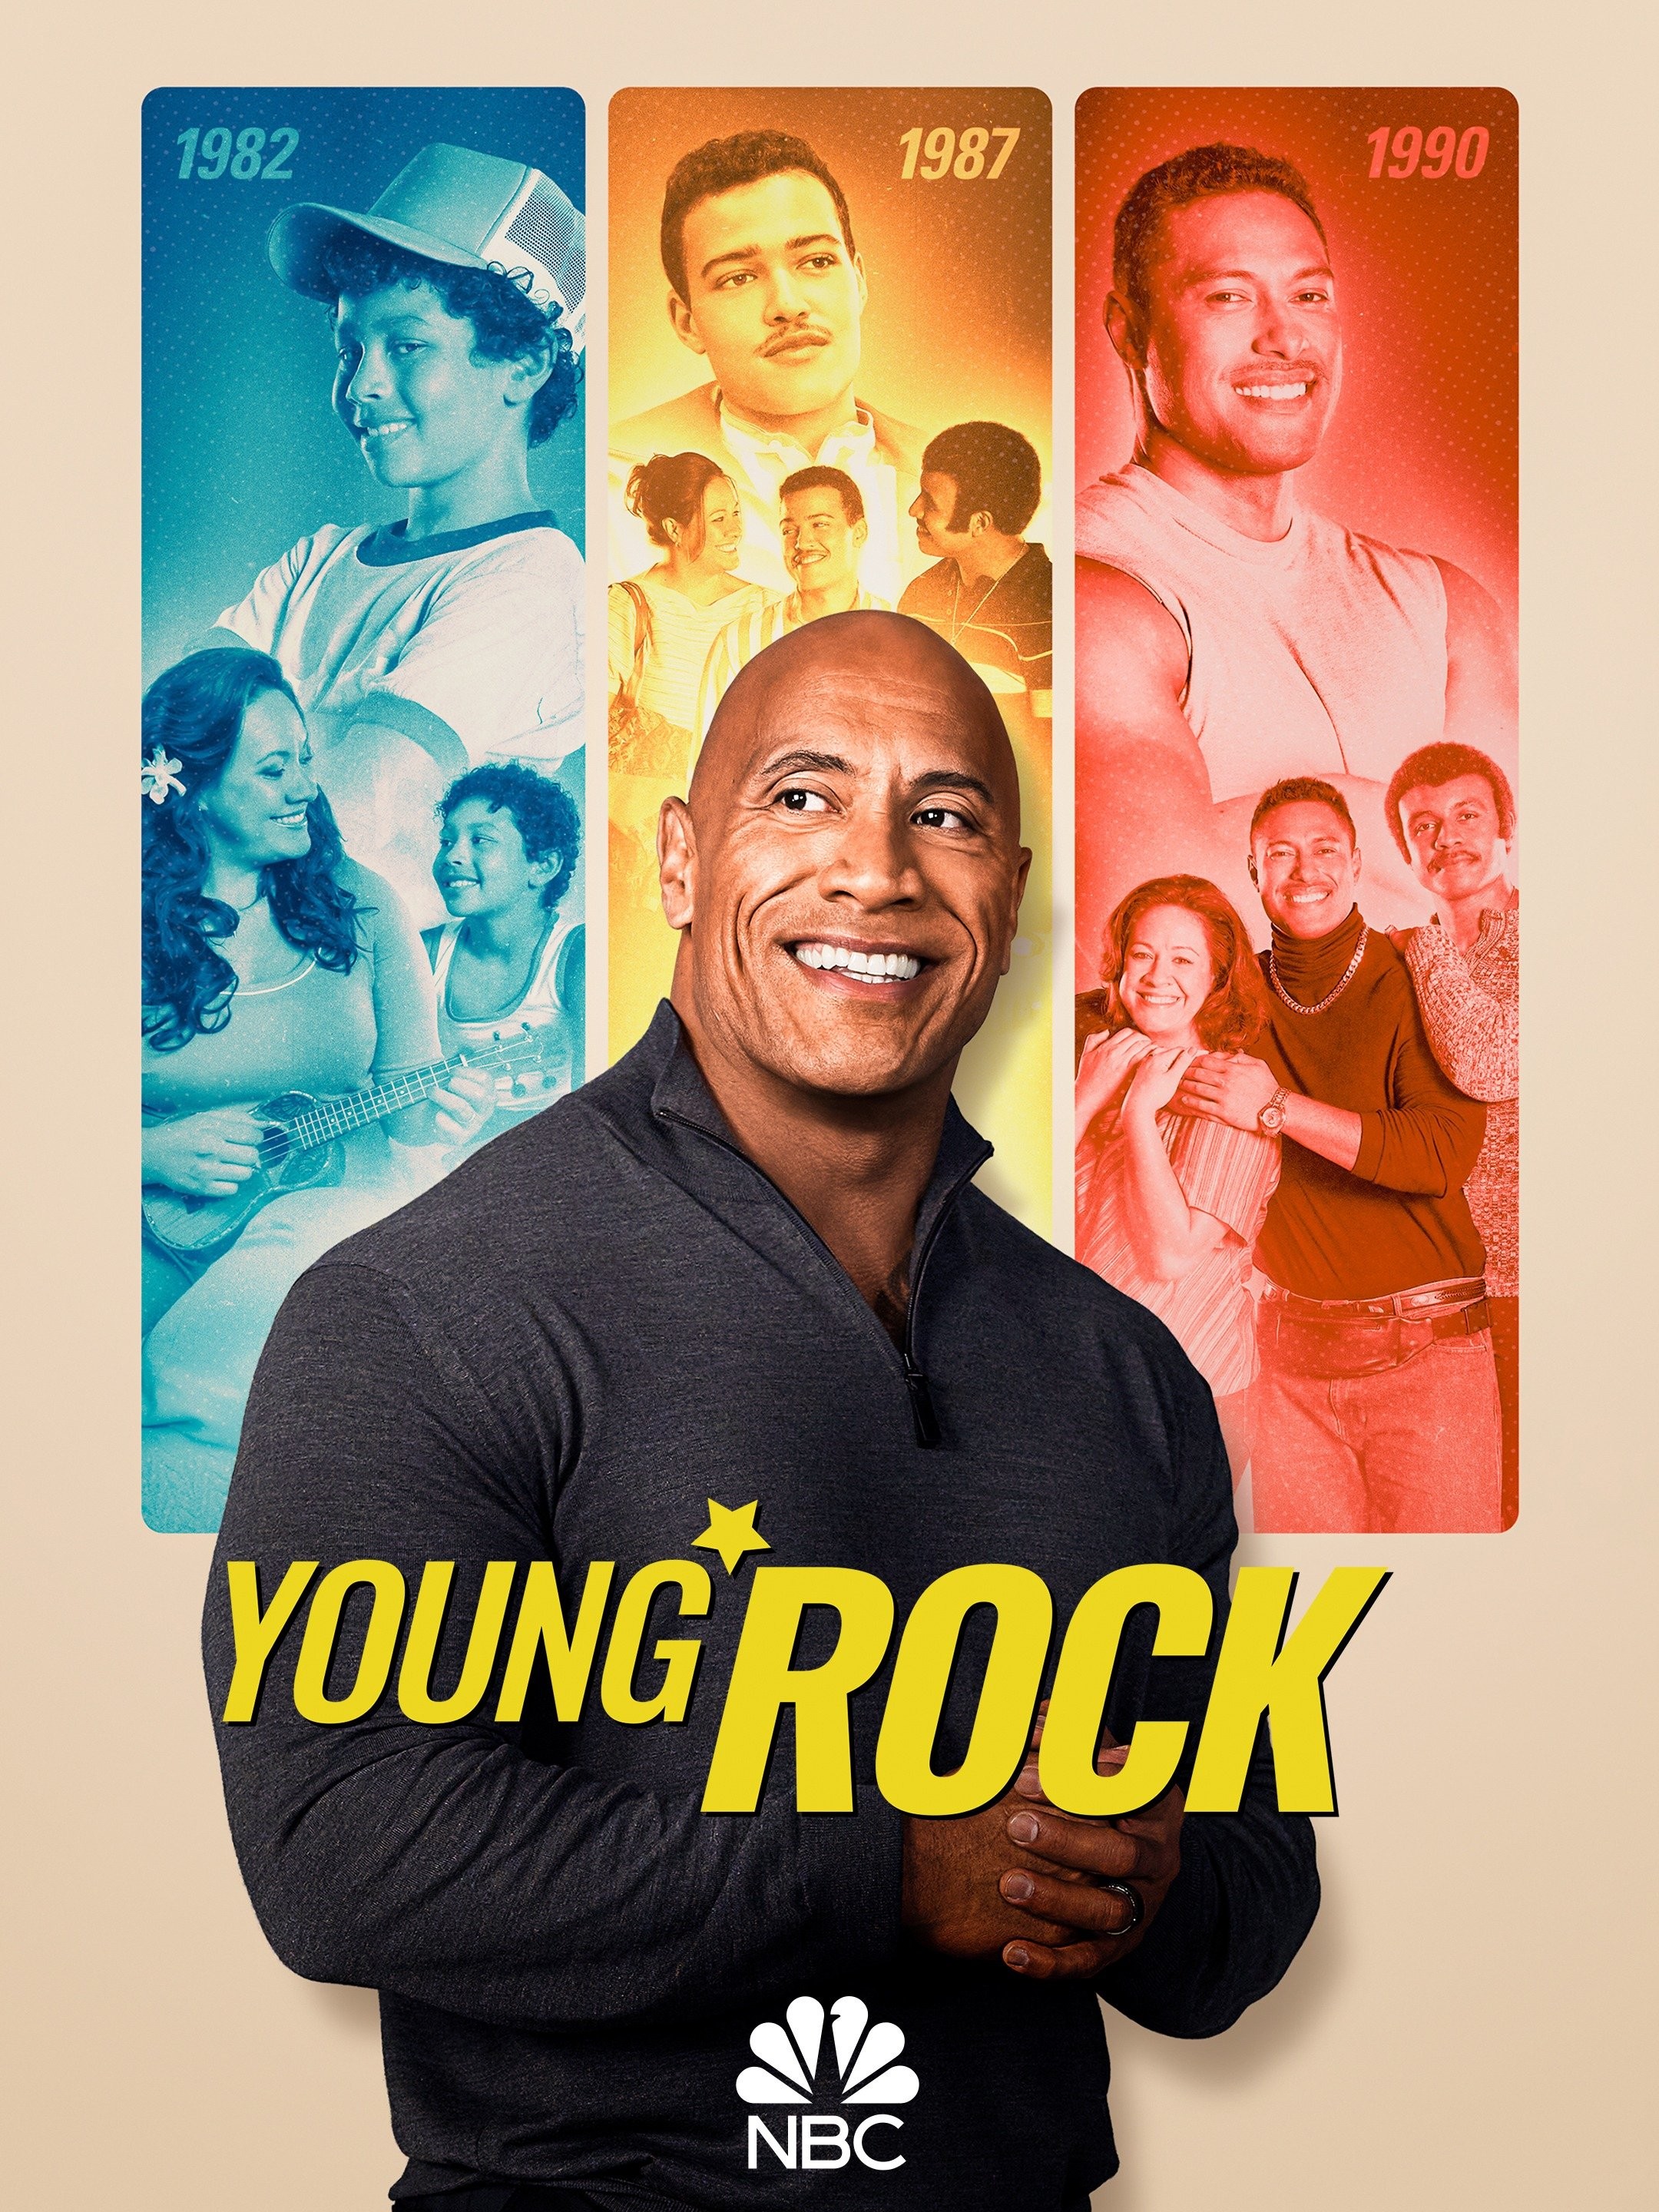 Dwayne Johnson Shares Photos of His 'Young Rock' TV Cast